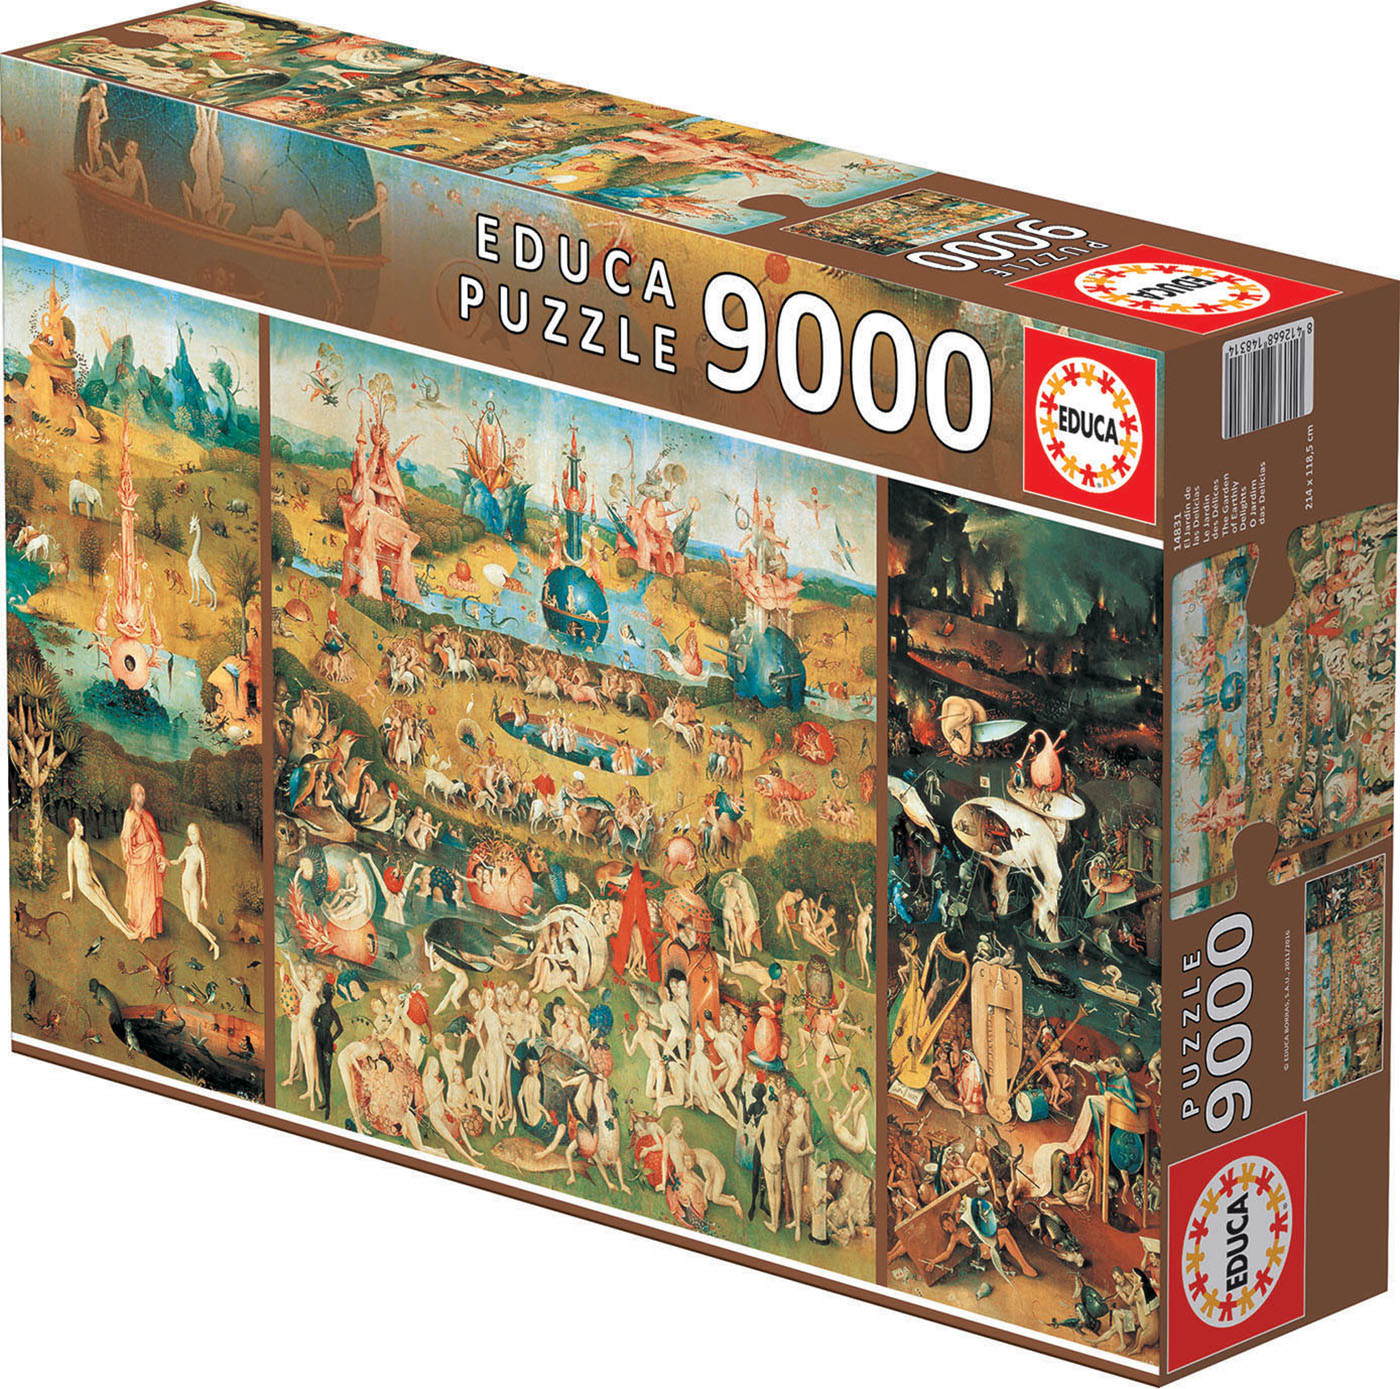 Educa 9,000 Piece Puzzle The Garden Of Earthly Delights 